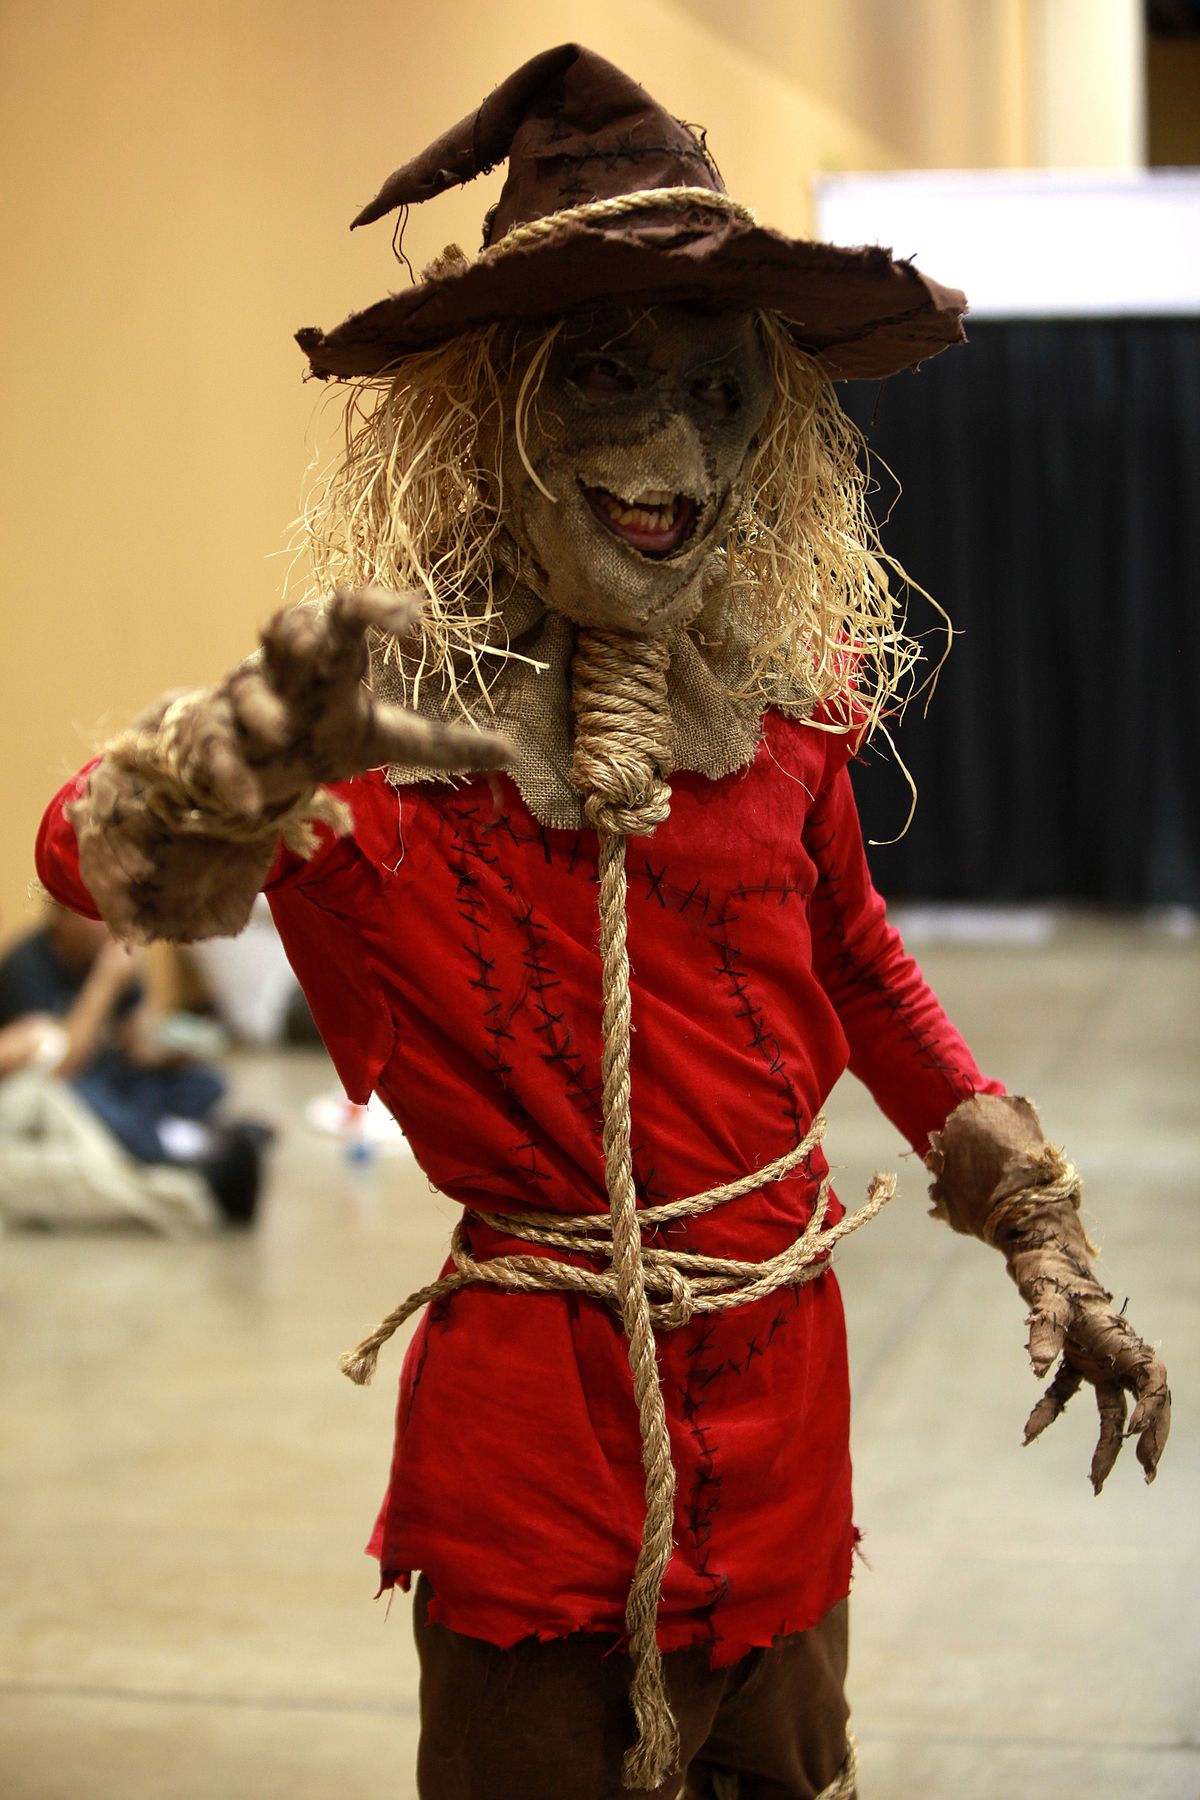 Scarecrow - Wikidata